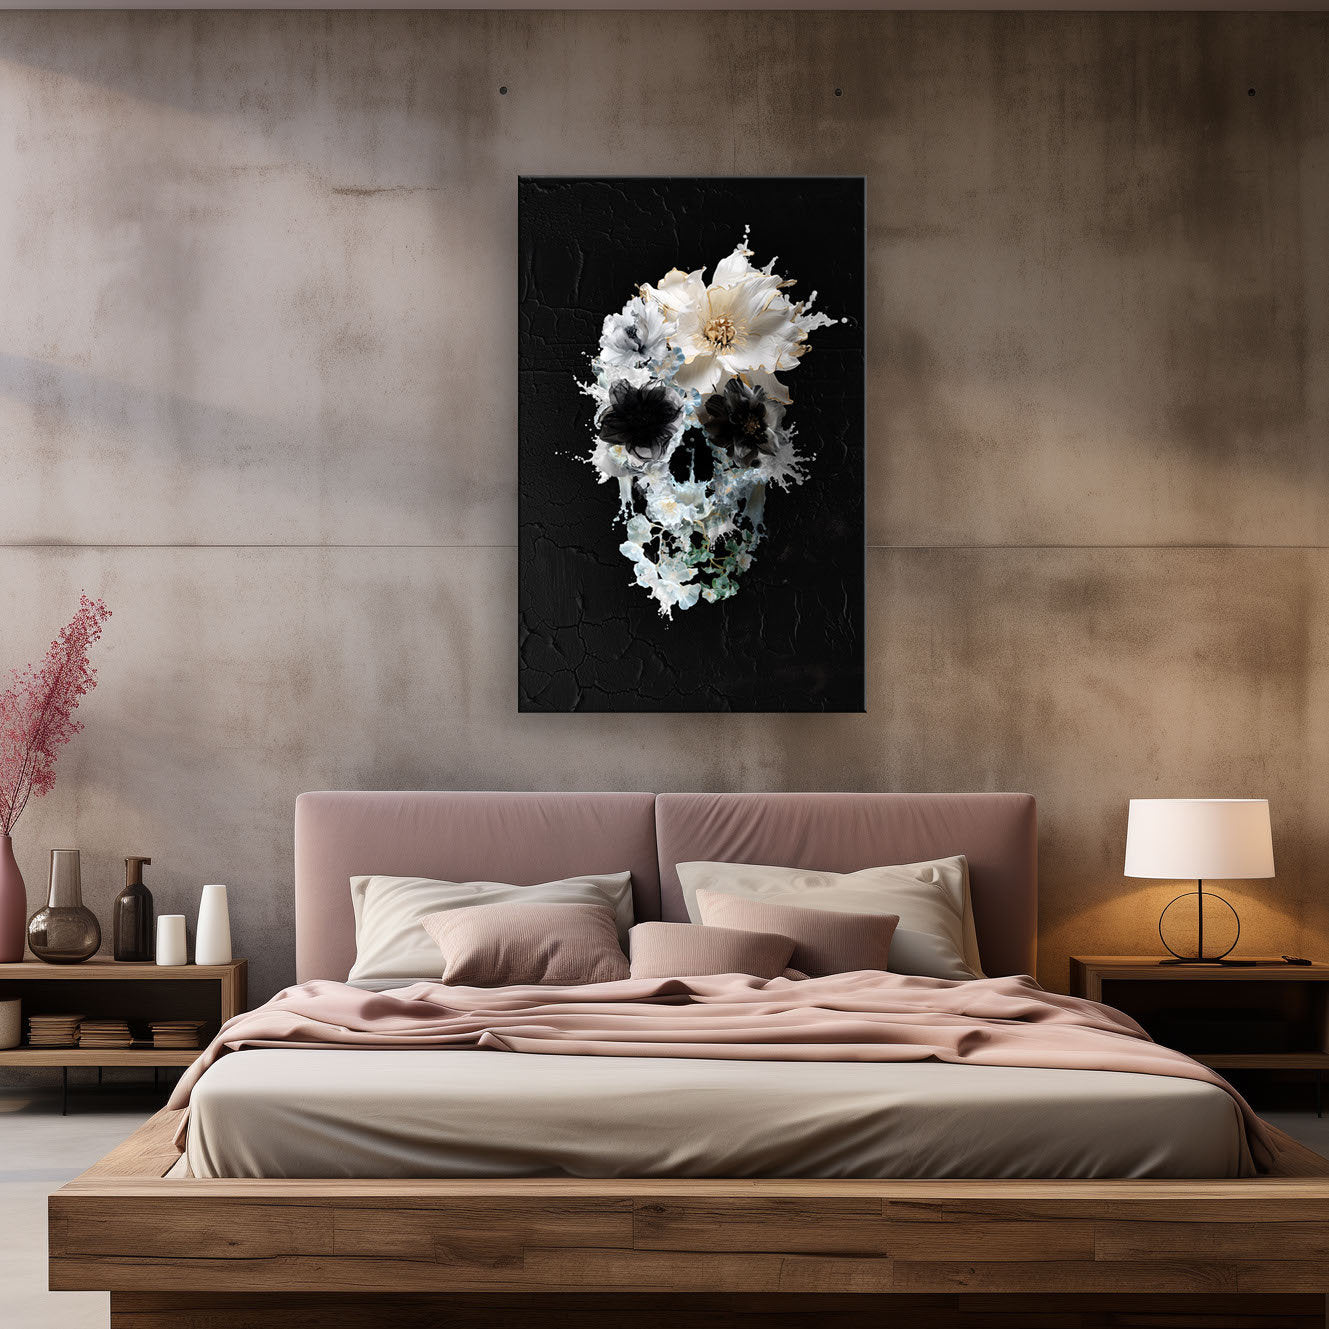 Bloom Skull Canvas Print, Black And White Skull Canvas Art Print, Gothic Sugar Skull Art Home Decor Gift, Boho Skull Illusion Art